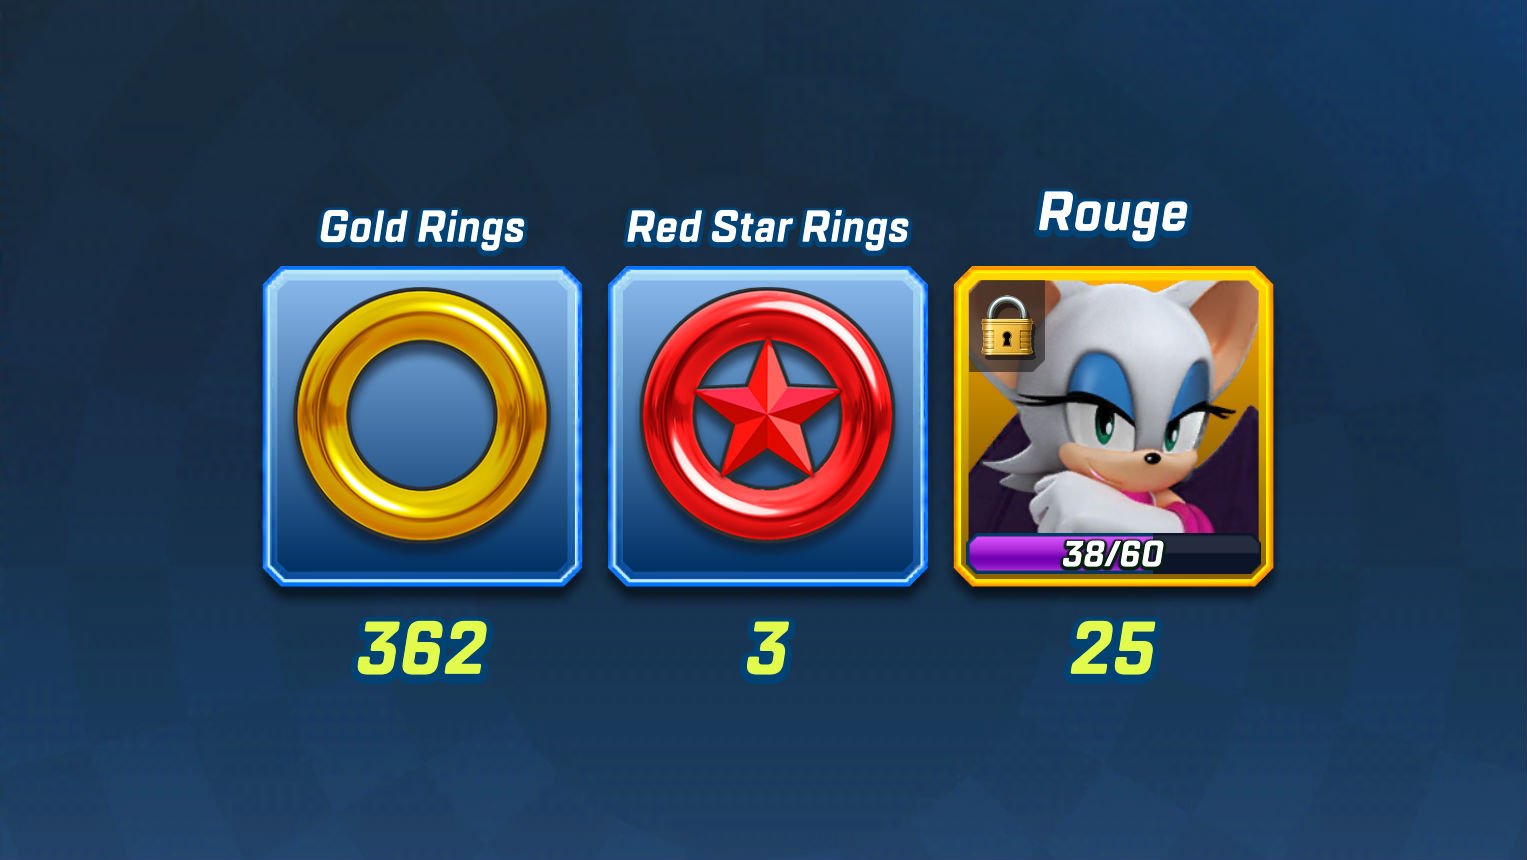 Red Star Rings, Sonic Speed Simulator Wiki